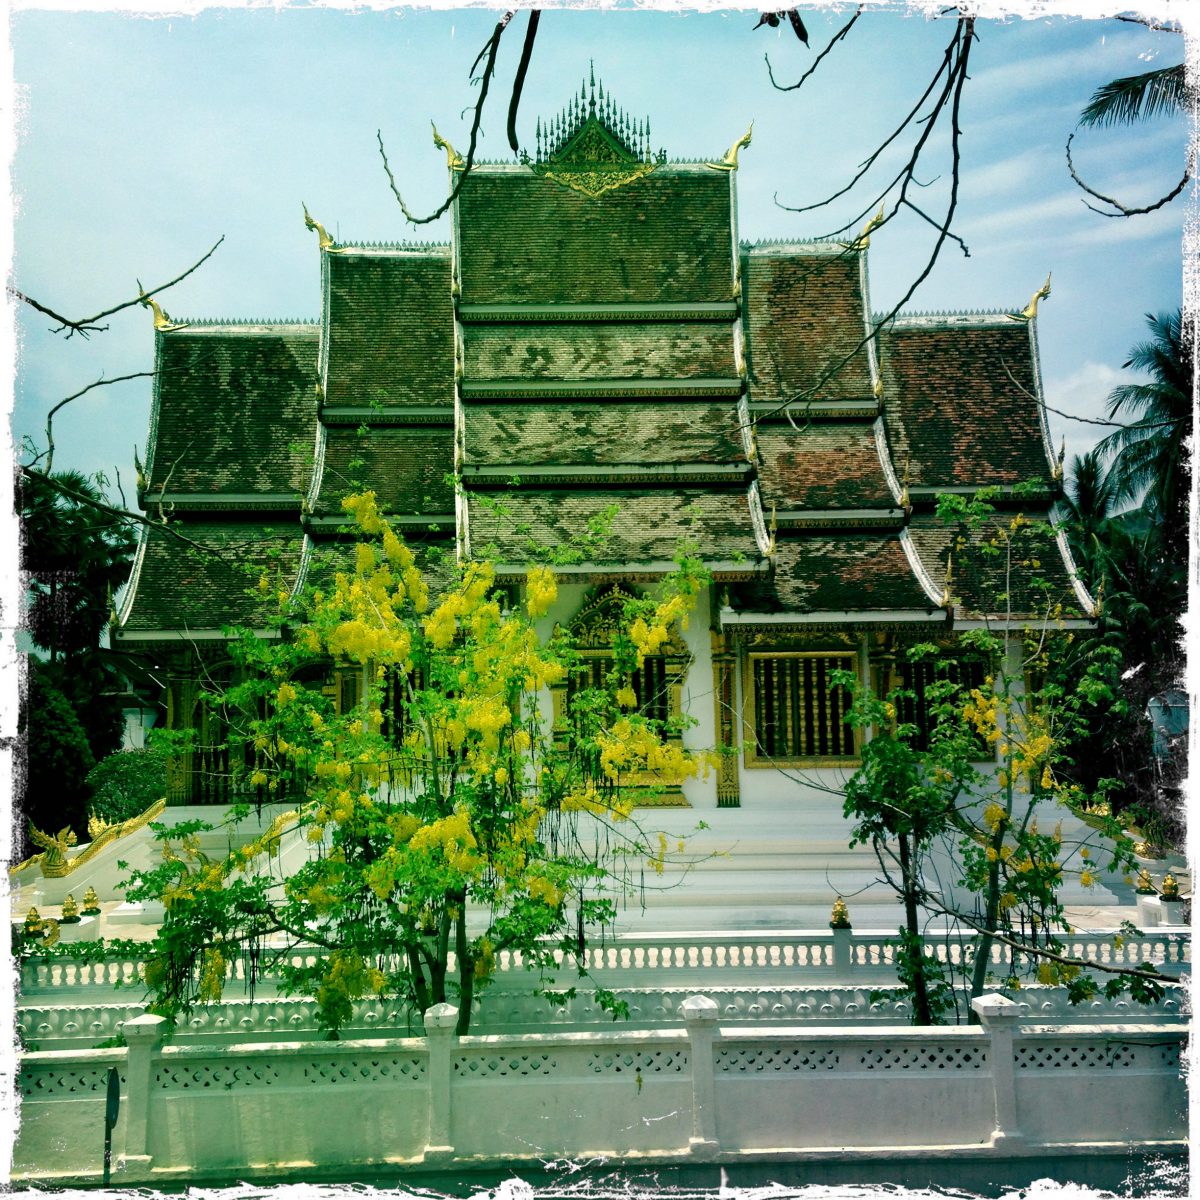 The World of KOTUR: Kotur Visits Luang Prabang